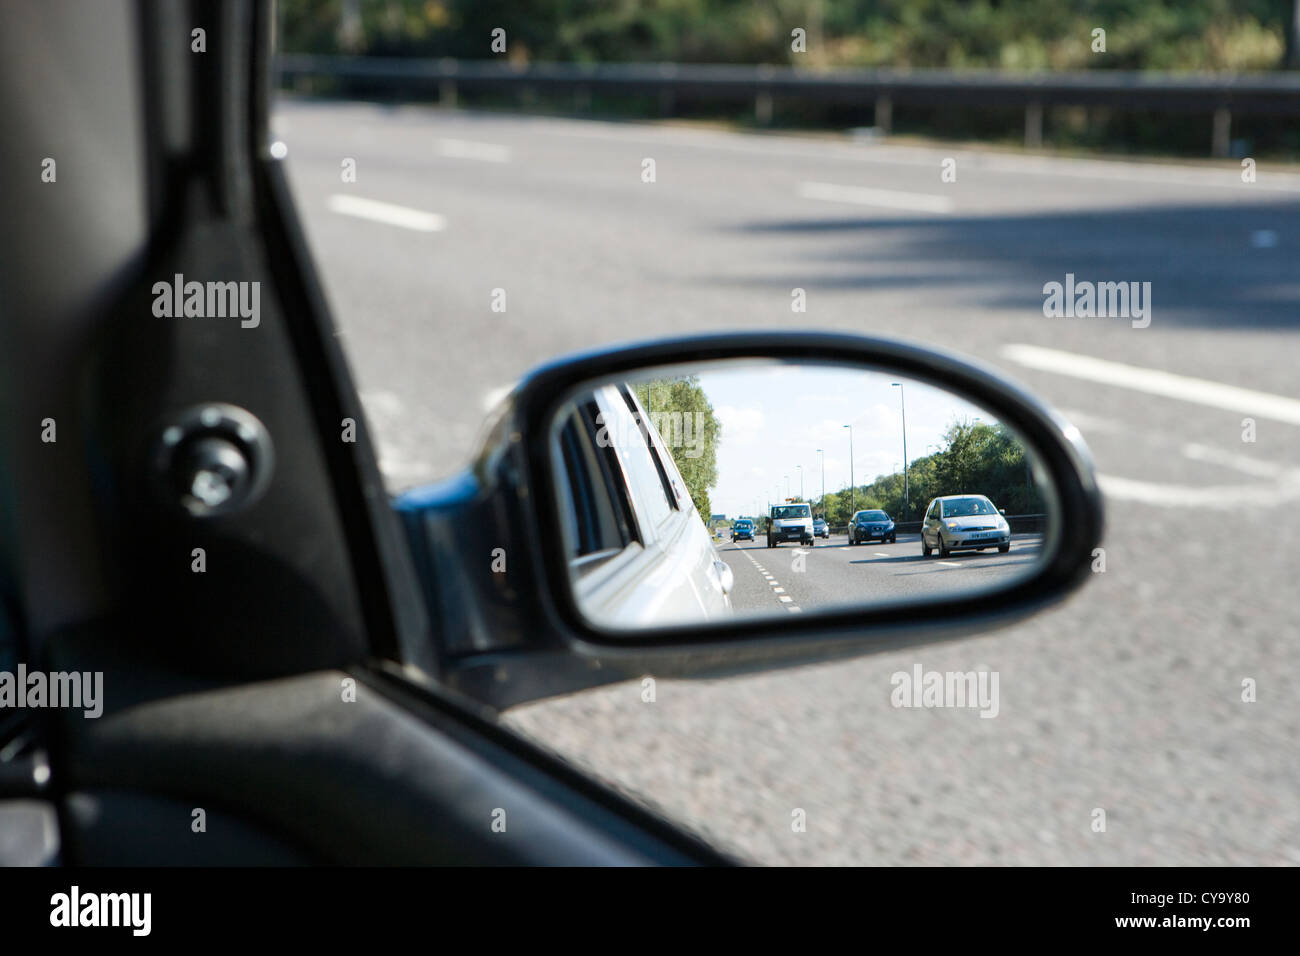 Car rear view mirror. Stock Photo